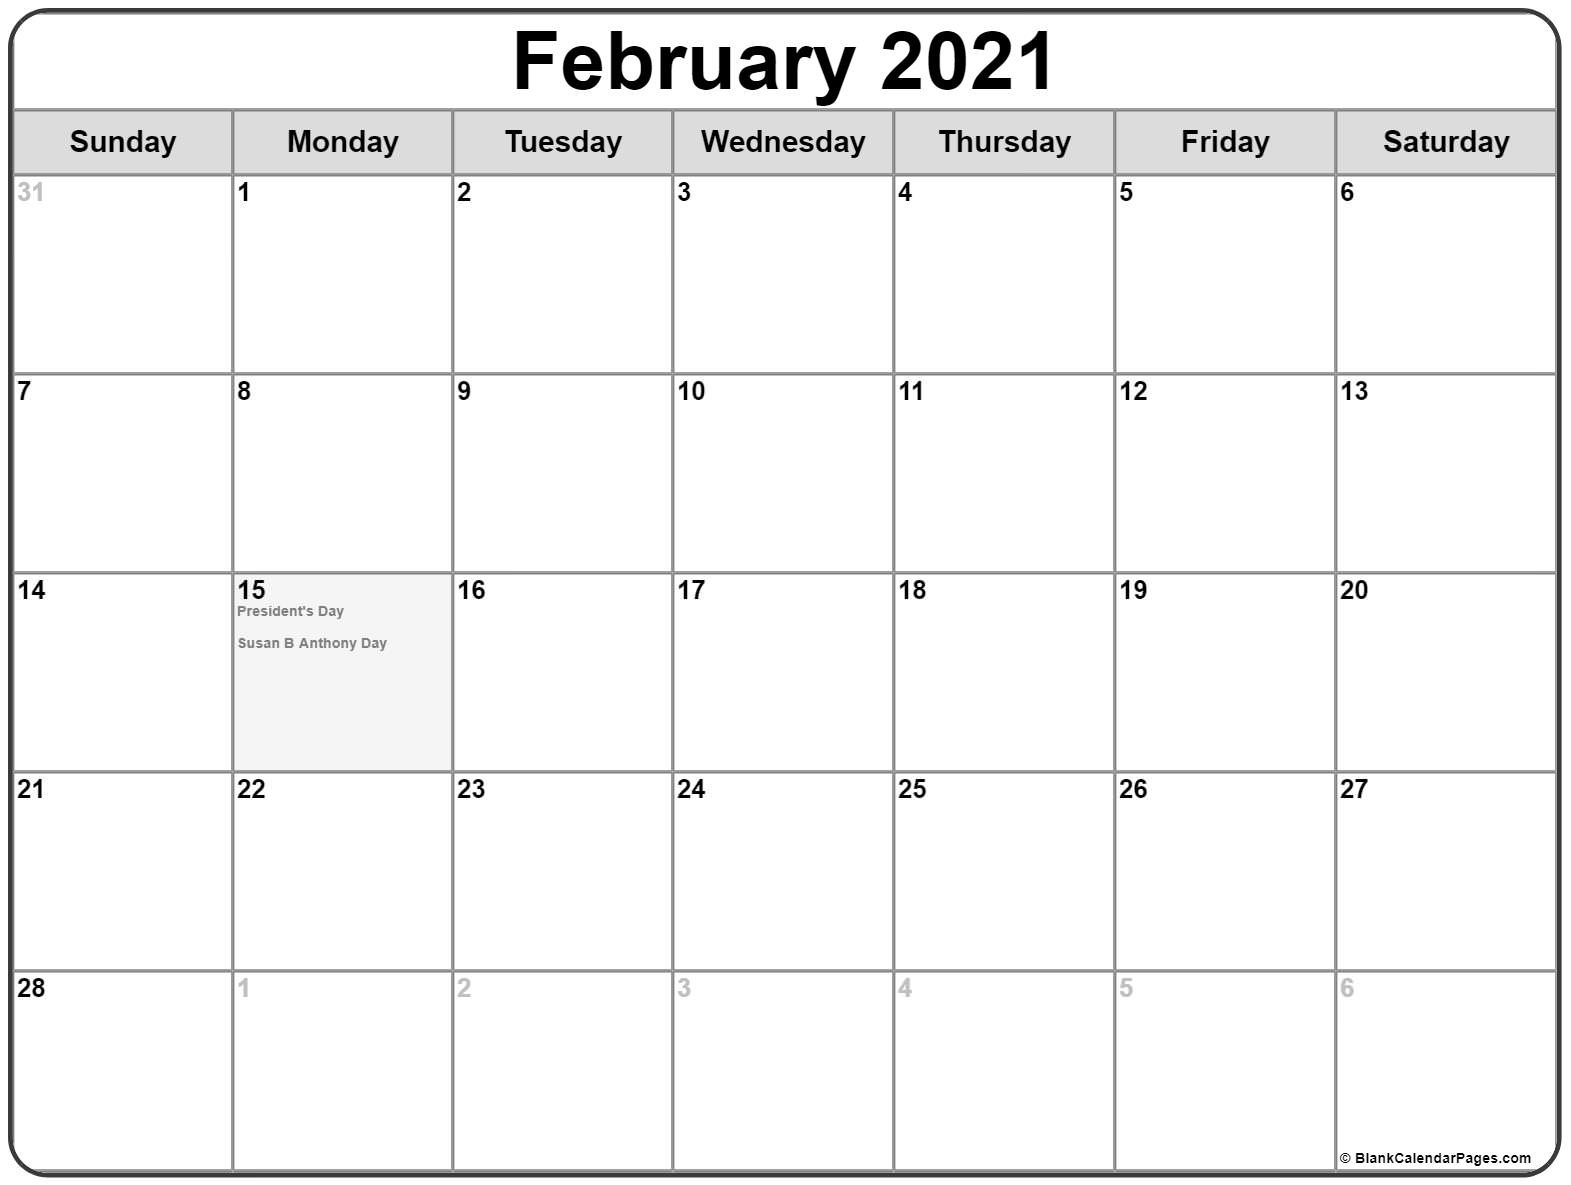 February 2021 Calendar With Holidays Wiki June 2021 Calendar